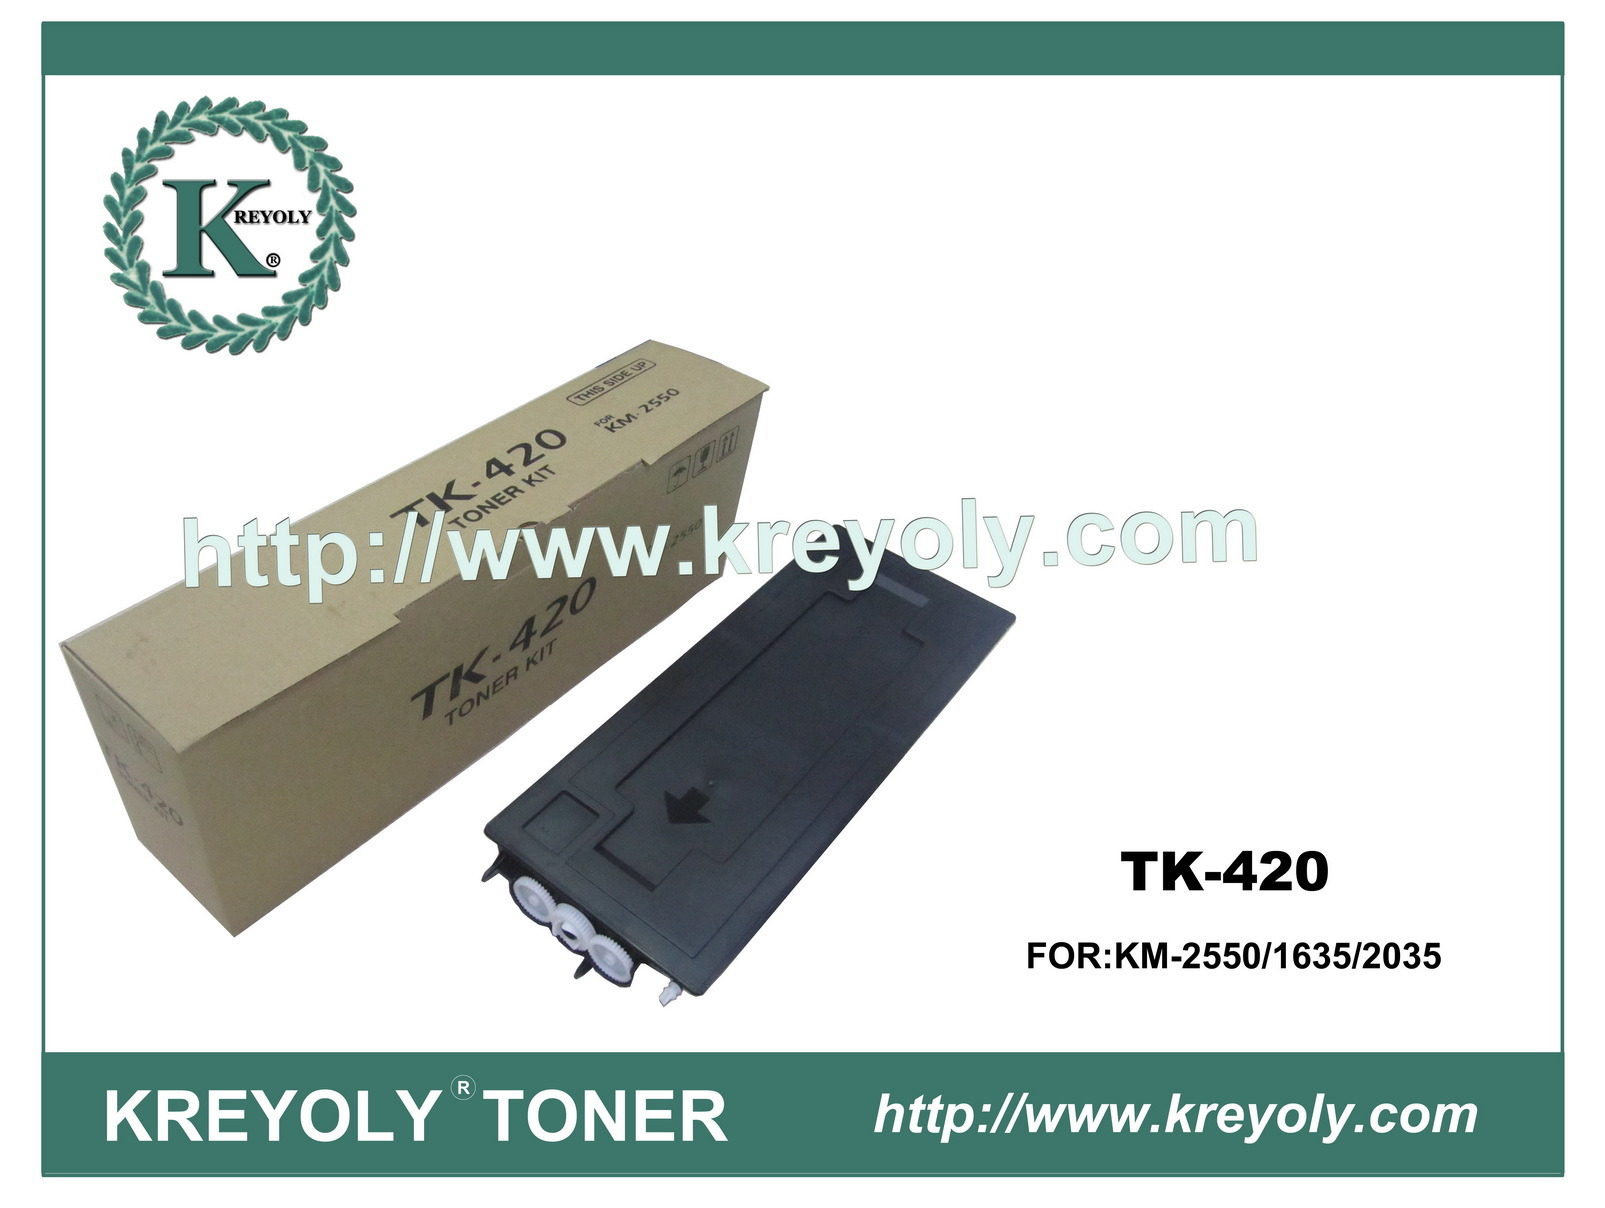 Printer Toner Cartridge for Kyocera of TK-420